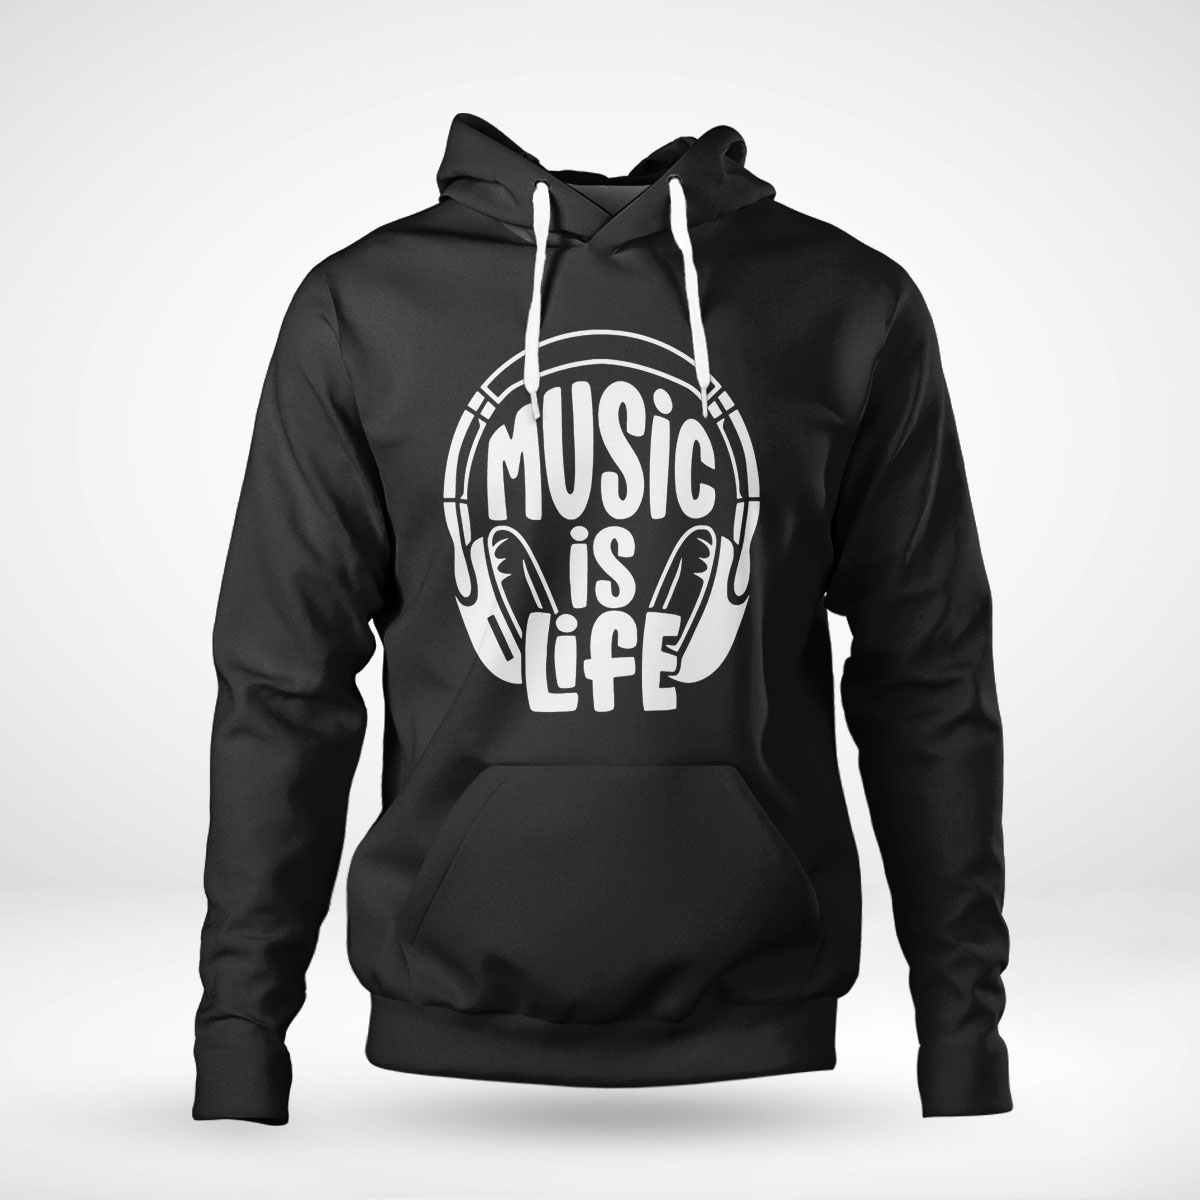 Music Is Life Shirt Sweatshirt, Tank Top, Ladies Tee